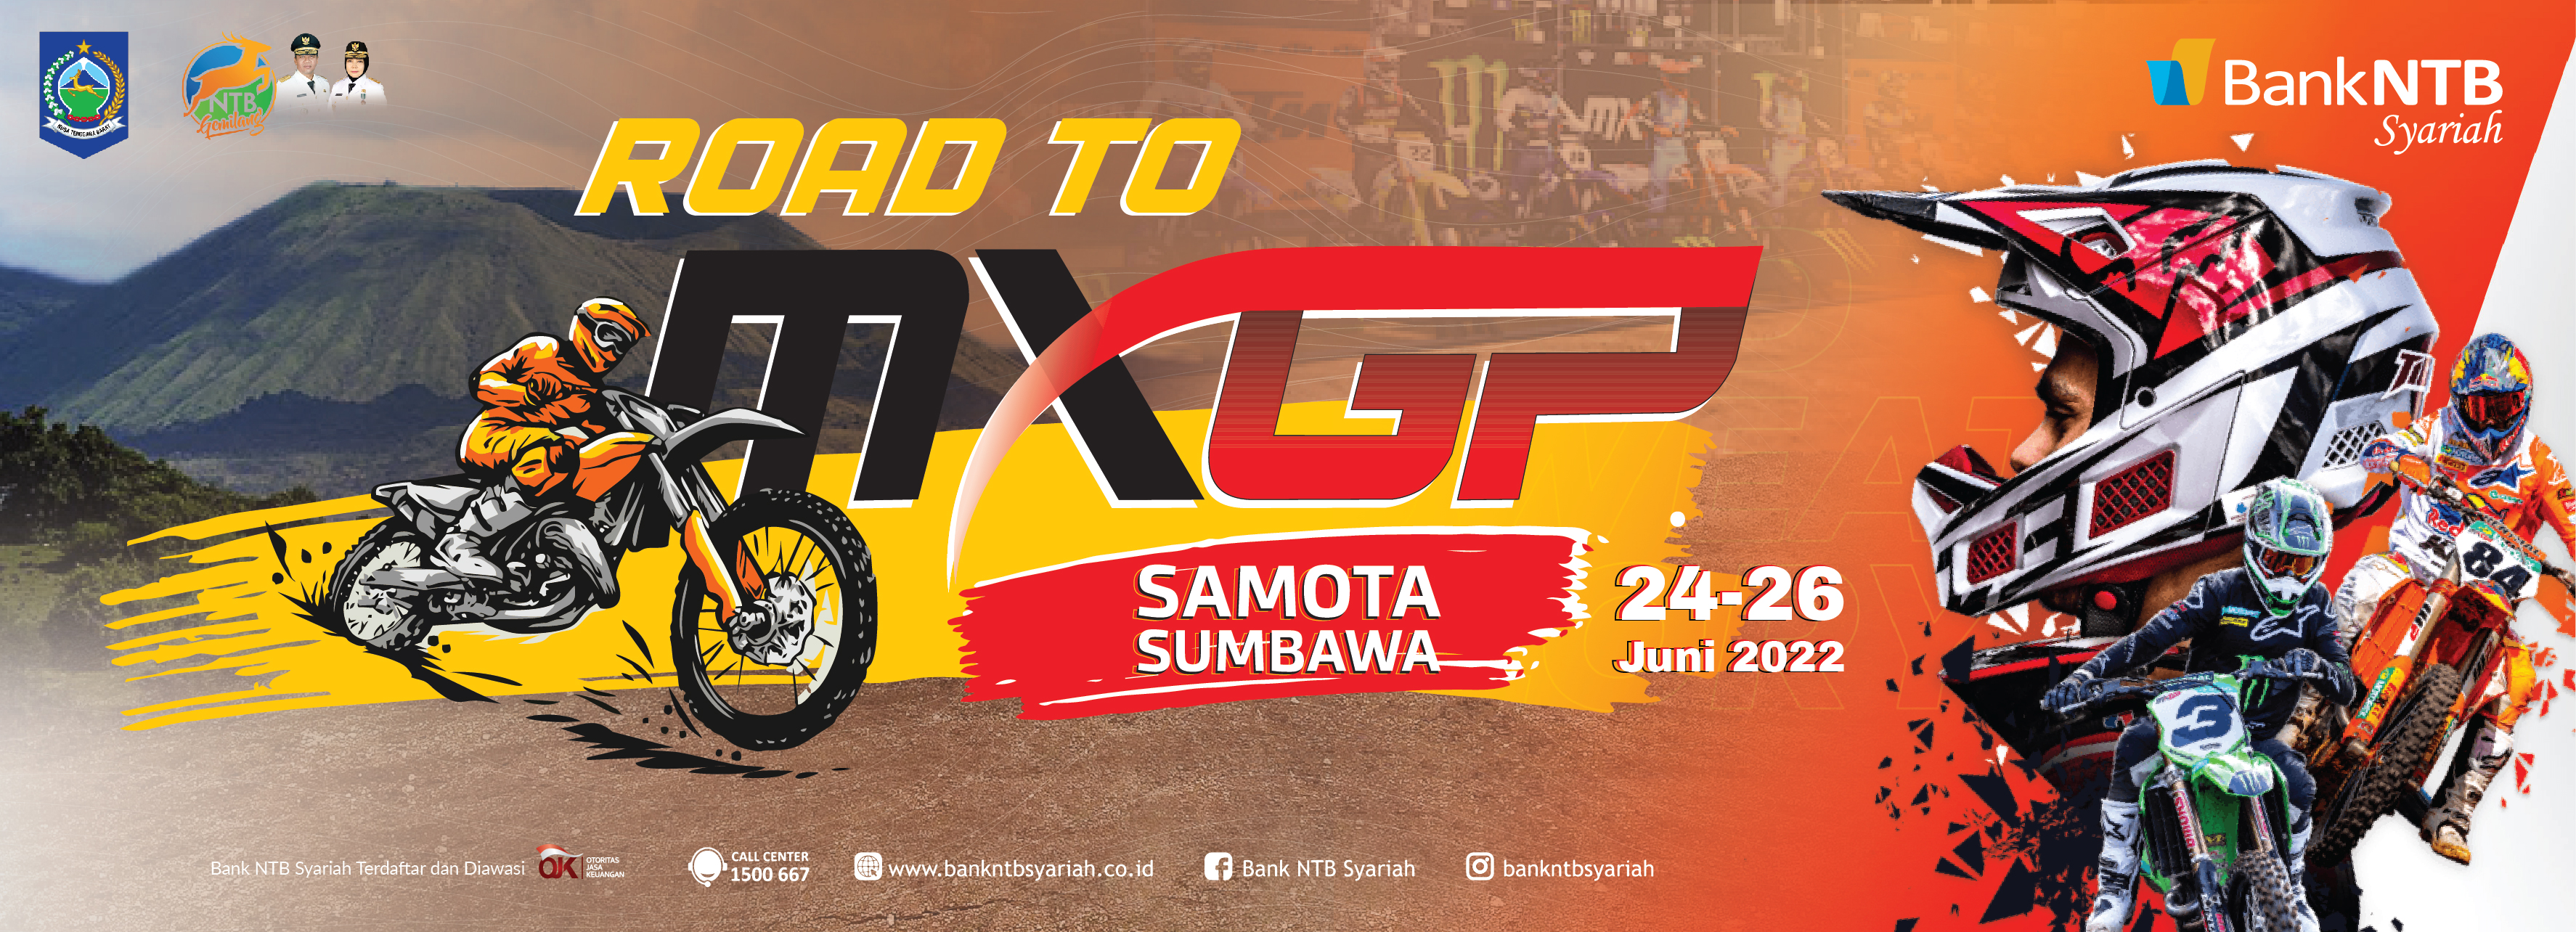 Road_to_Motocross_Grand_Prix_2022_Samota_Sumbawa.html